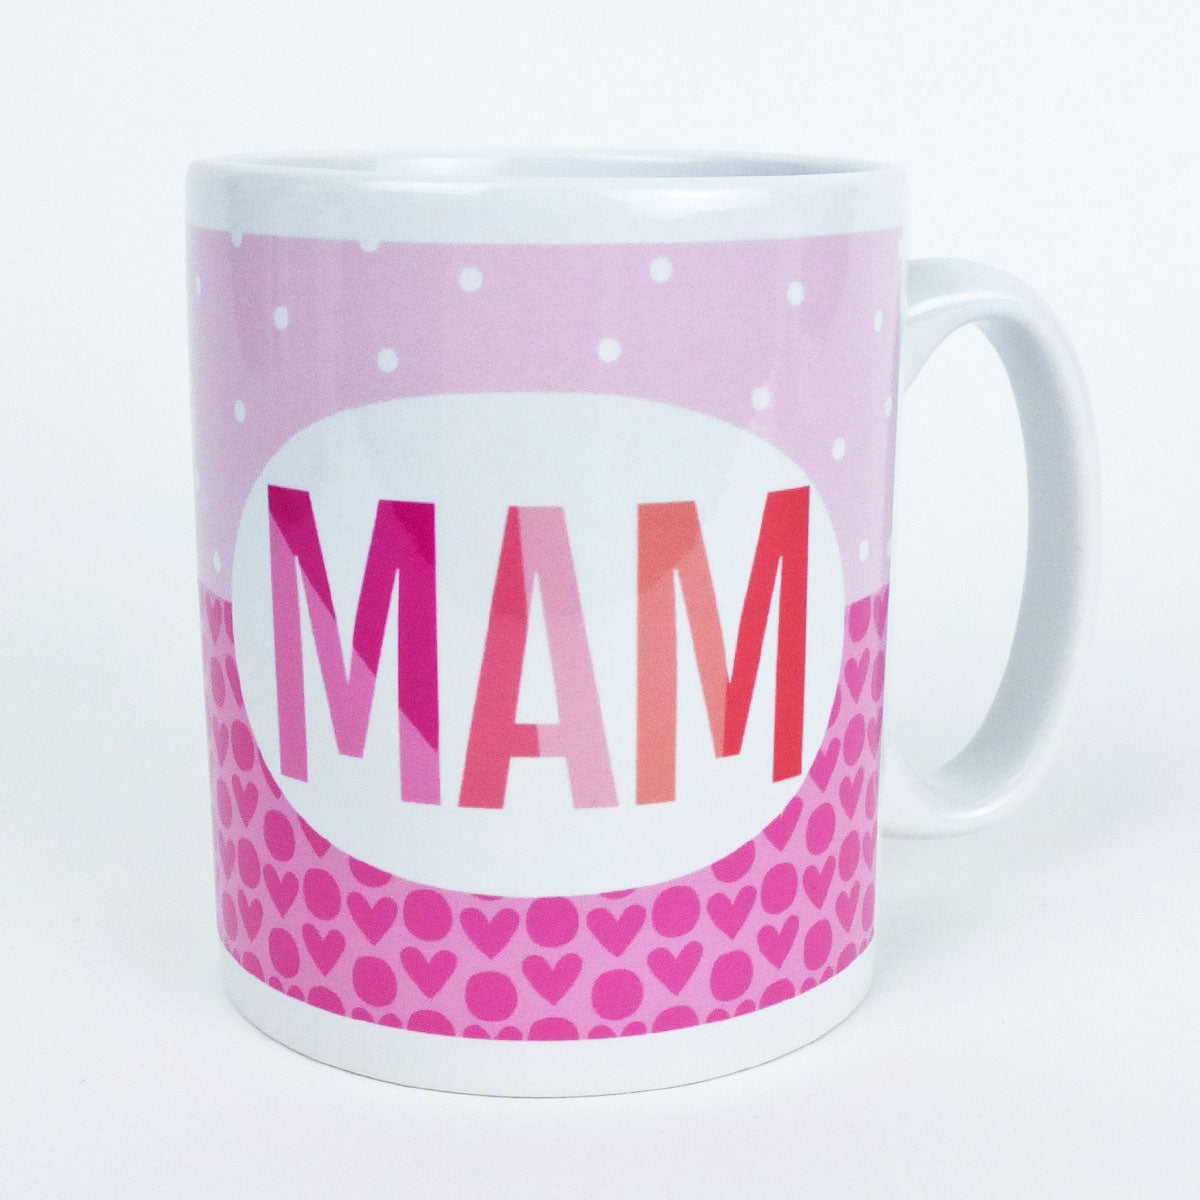 Welsh Mam Mug in Pink